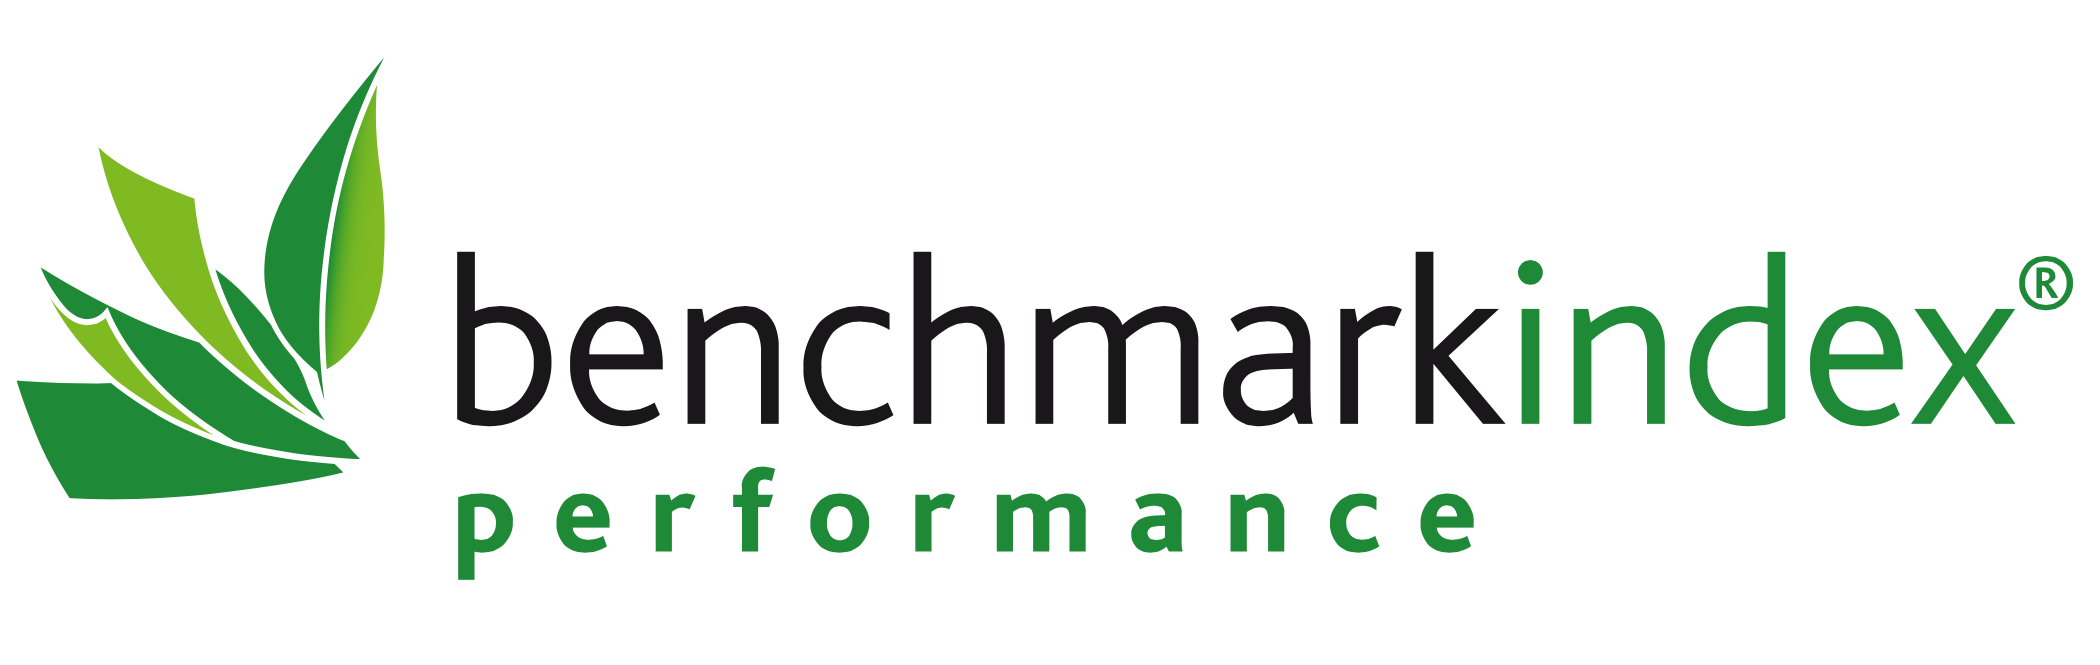 logo-benchmark 2png